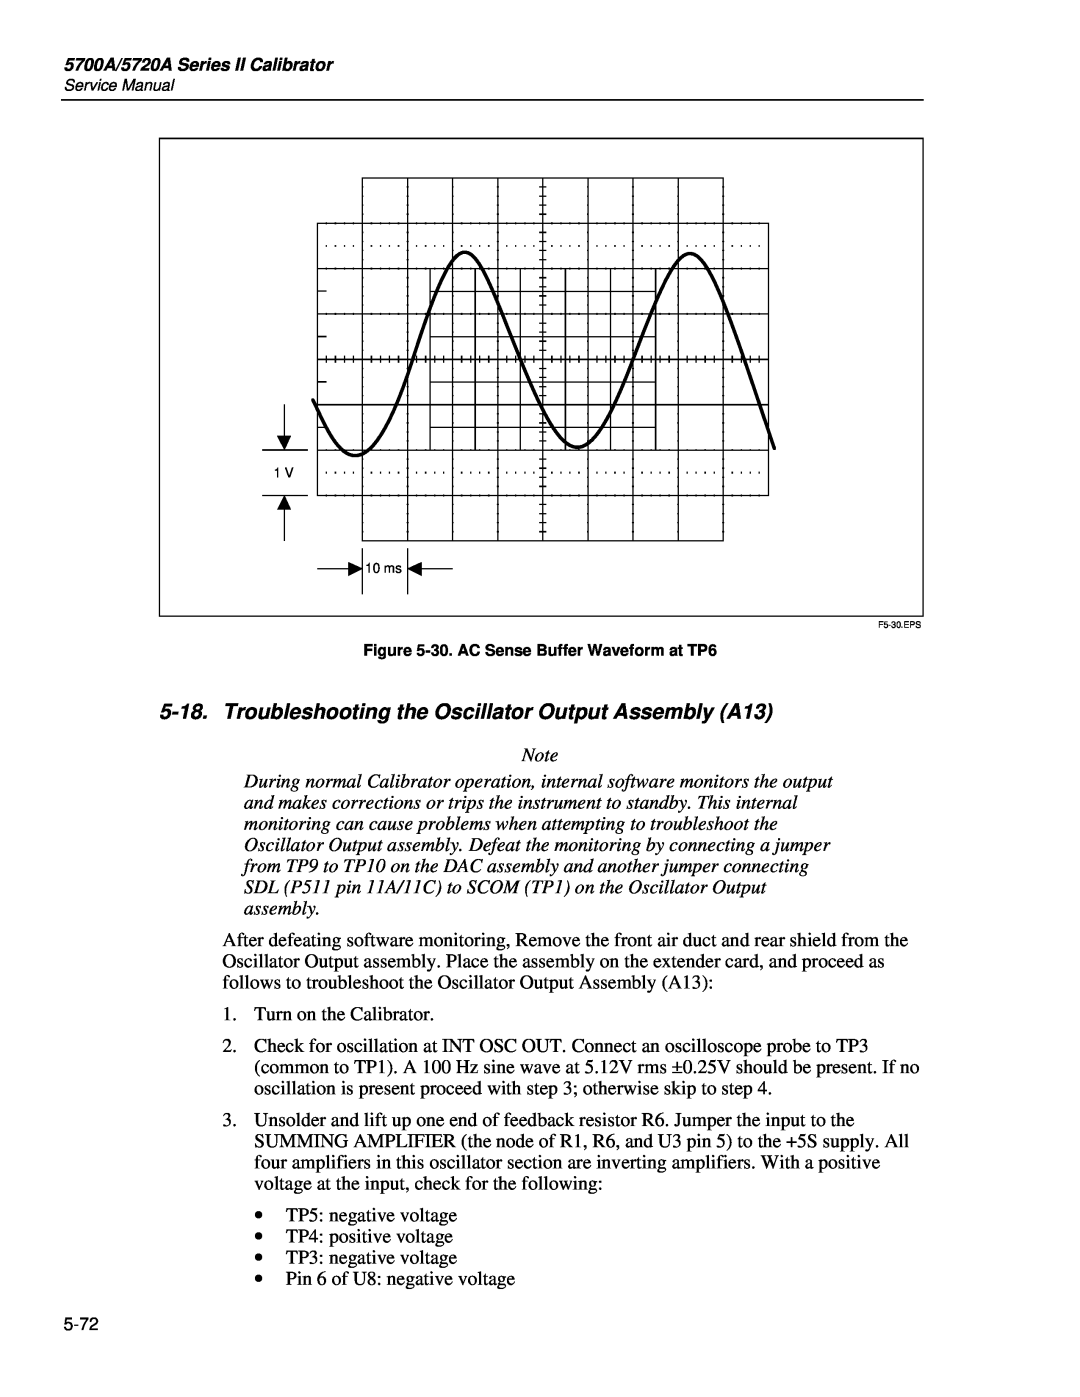 Fluke 5720A service manual Troubleshooting the Oscillator Output Assembly A13 